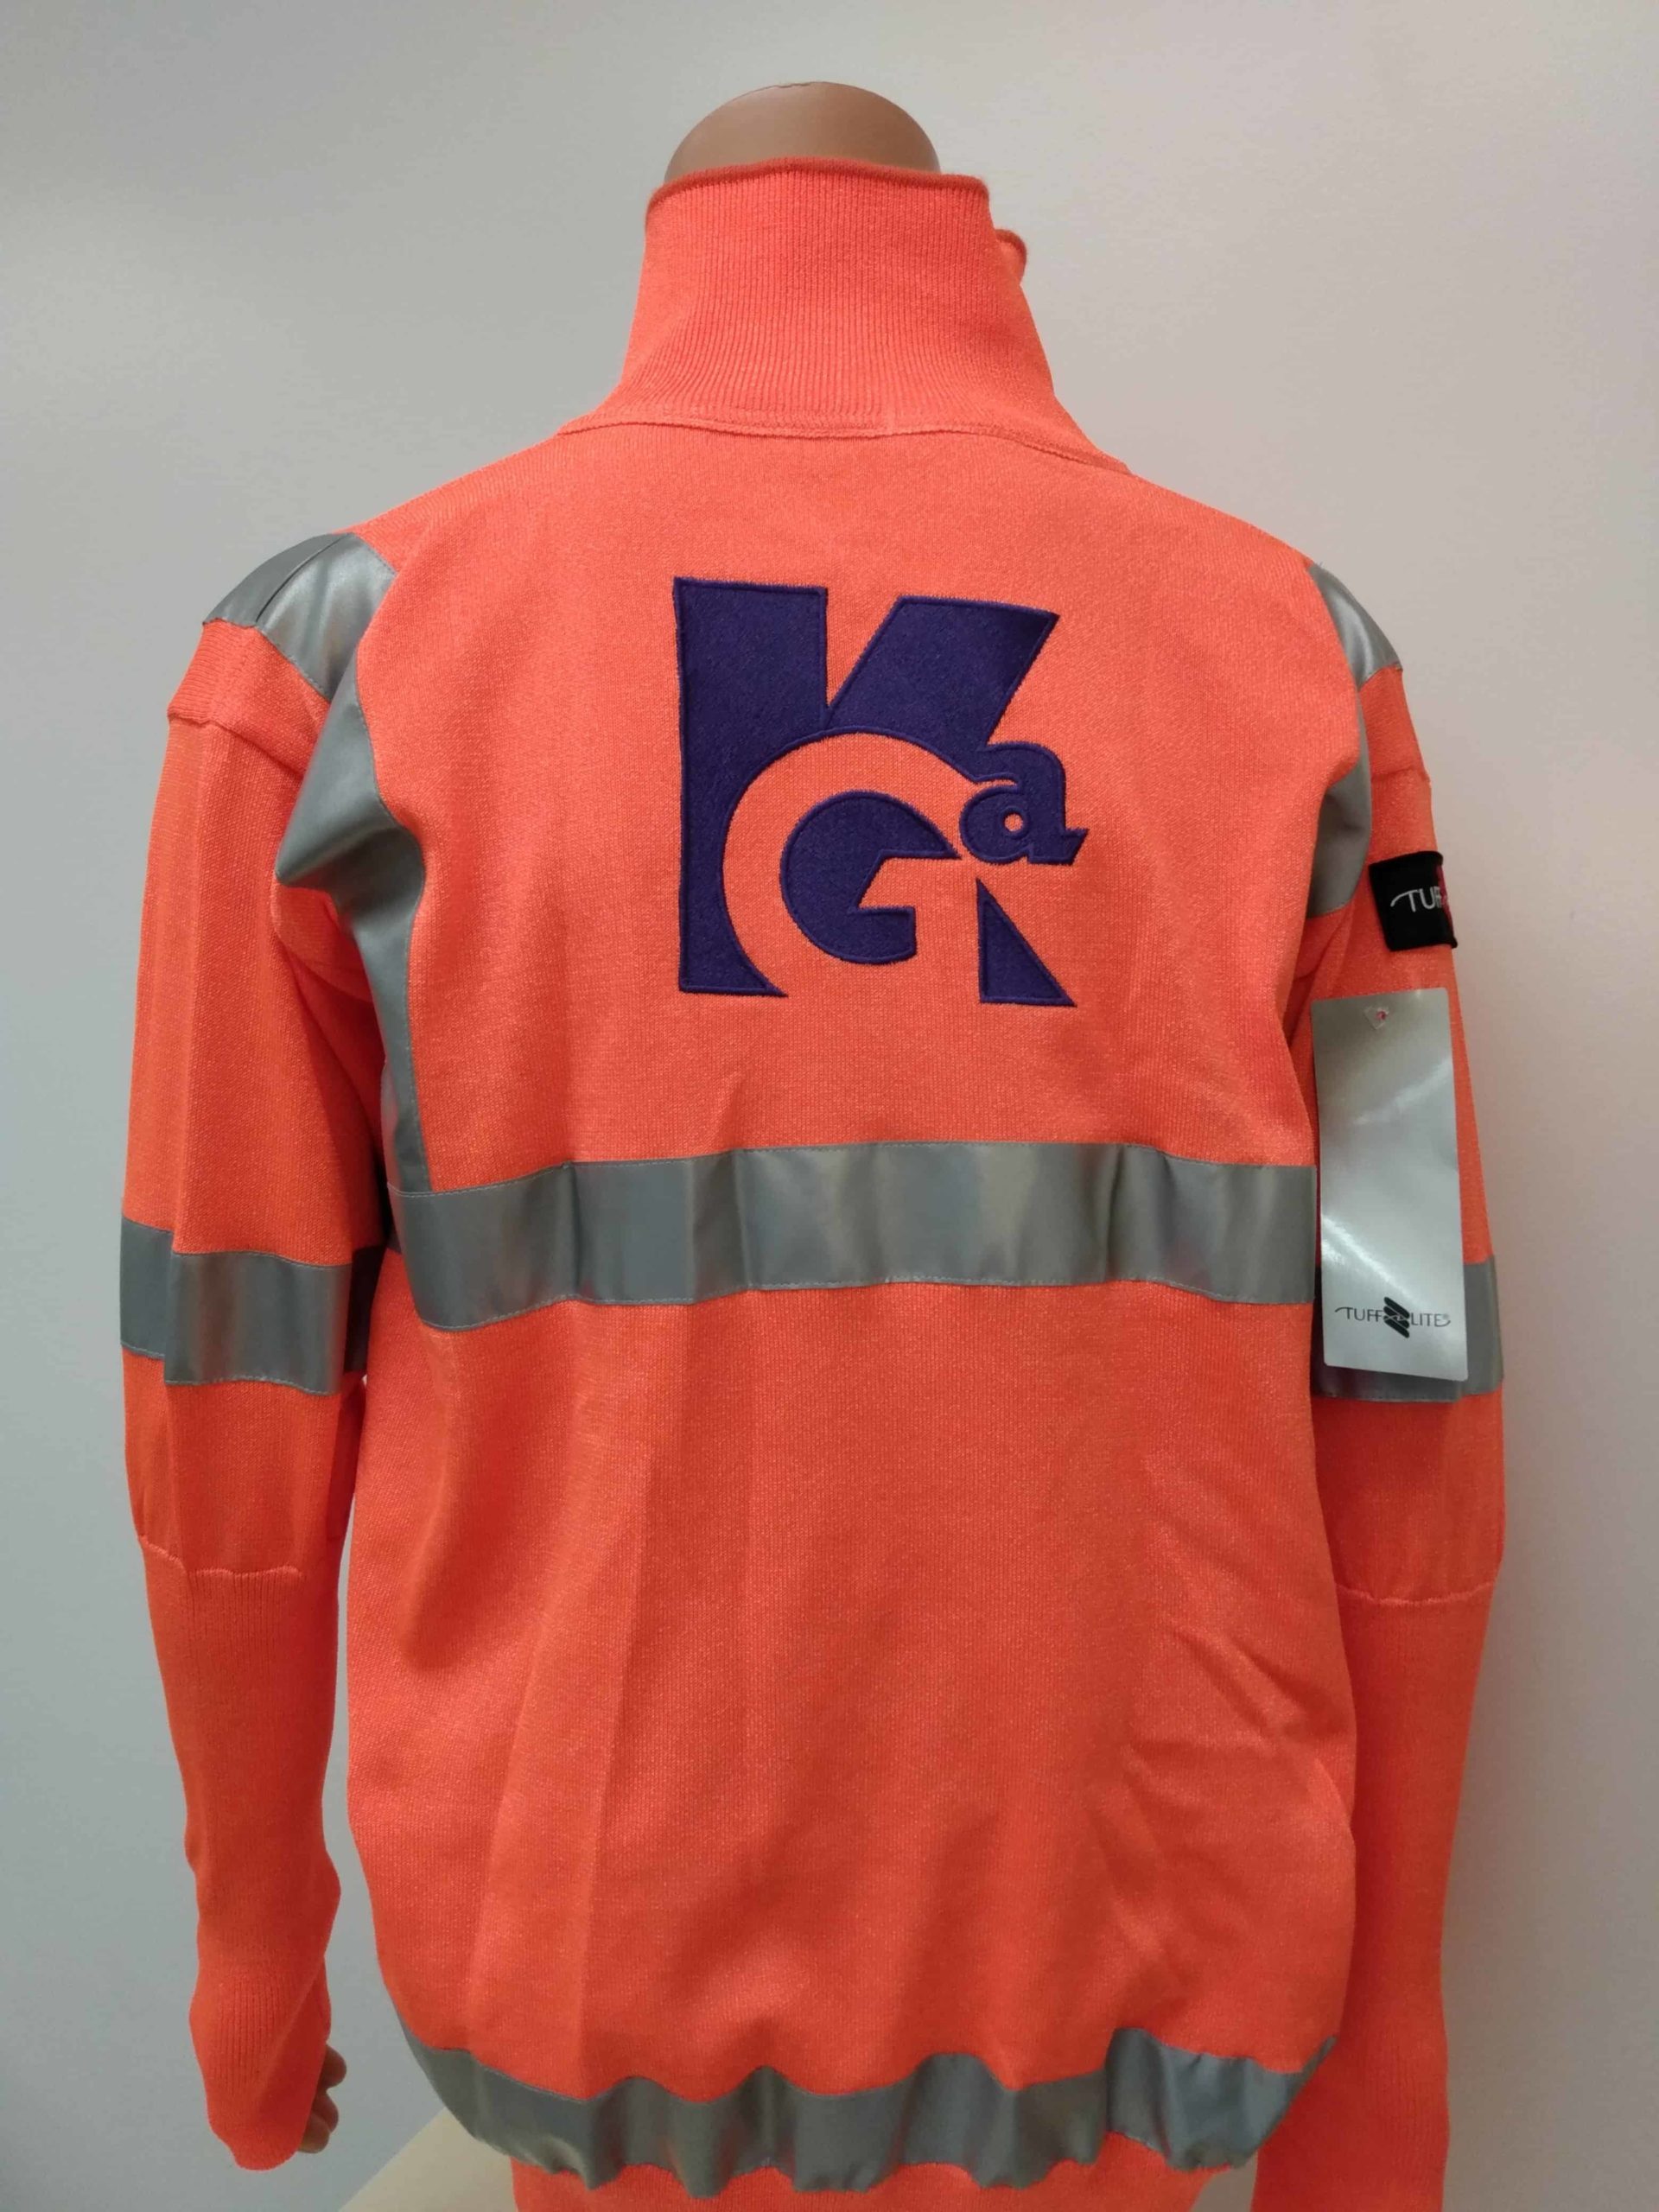 KGA Keel Jacket - Tuff-N-Lite® Orange) (Hi-Viz